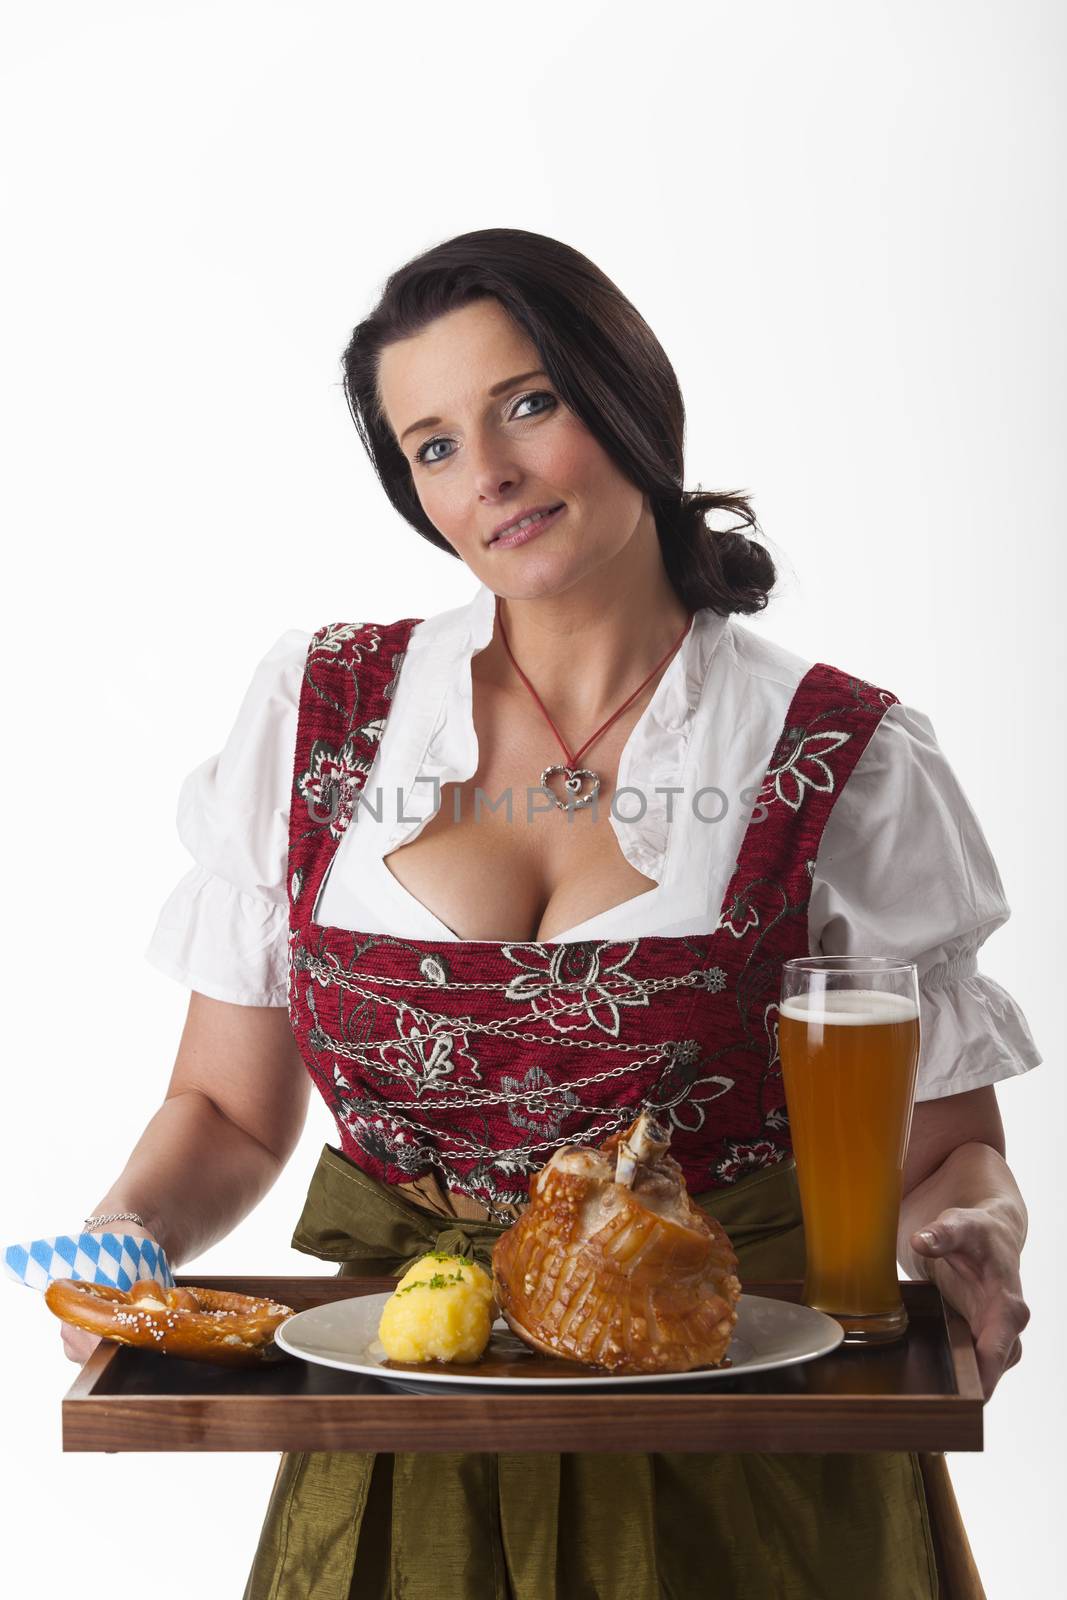 bavarian woman with roasted pork